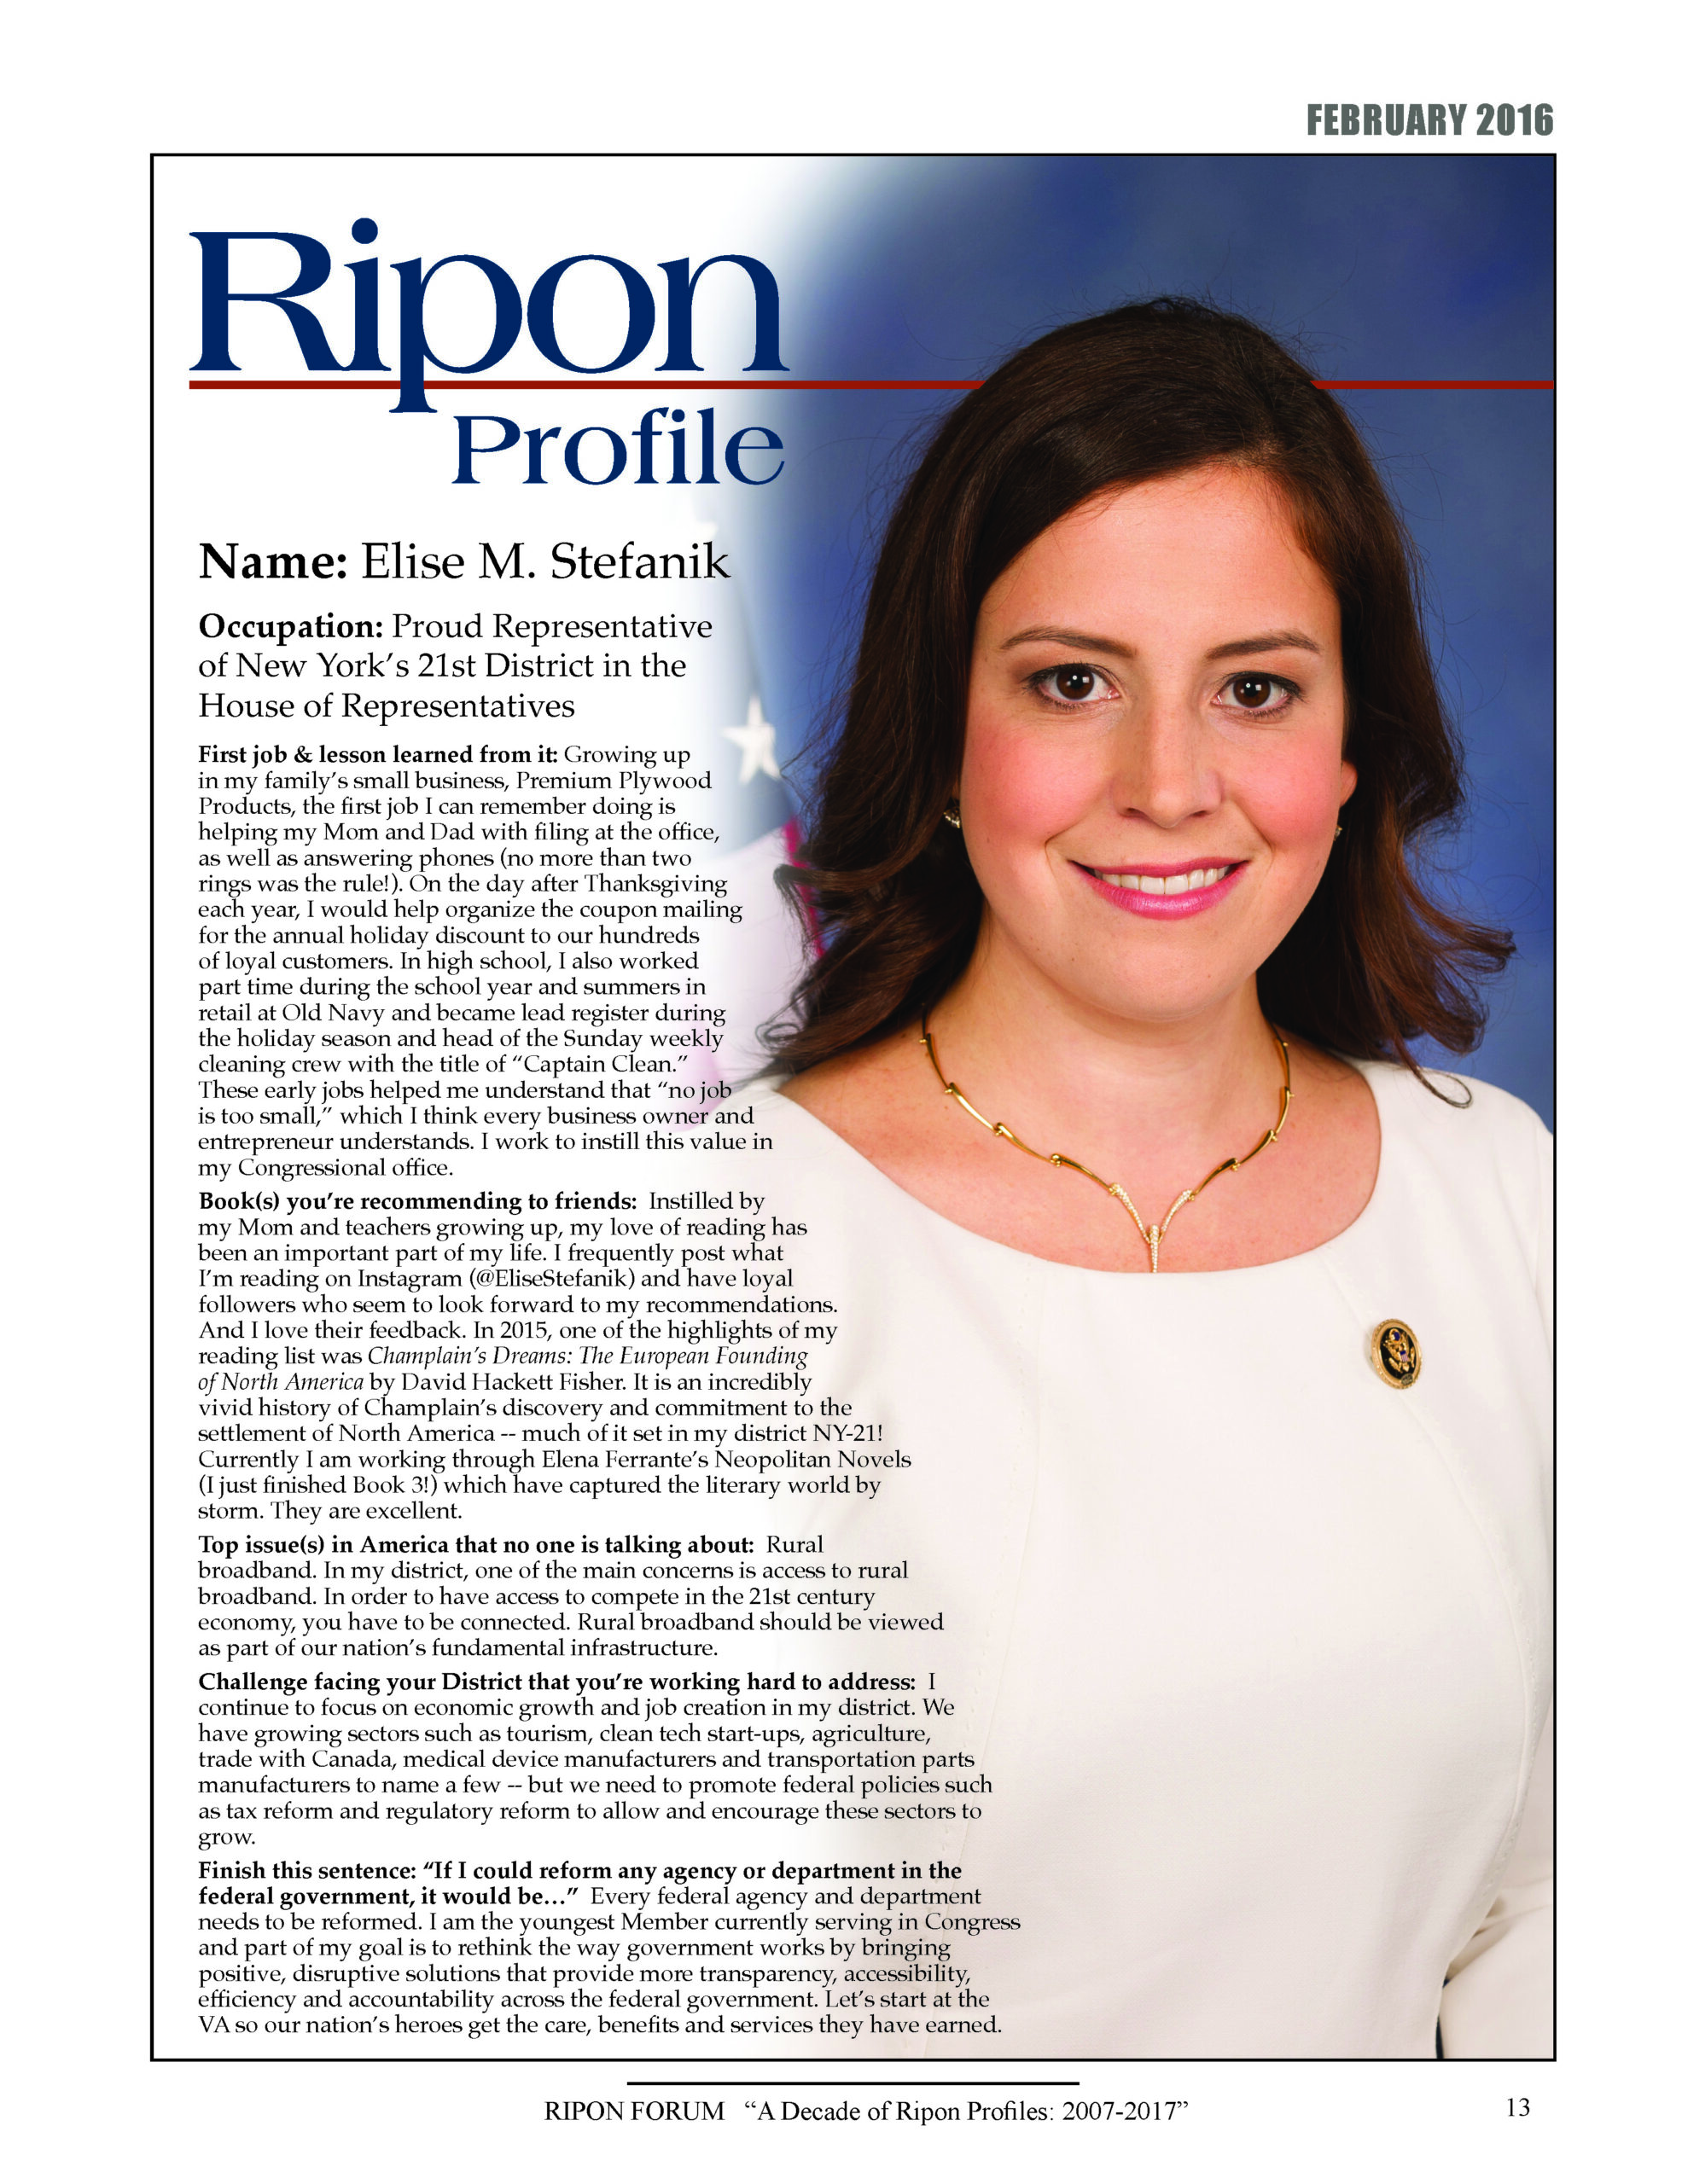 Ripon Profile of Elise M. Stefanik